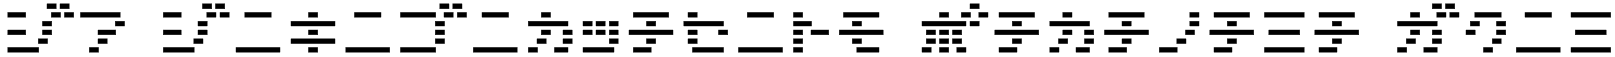 D3 DigiBitMapism Katakana Thin Font